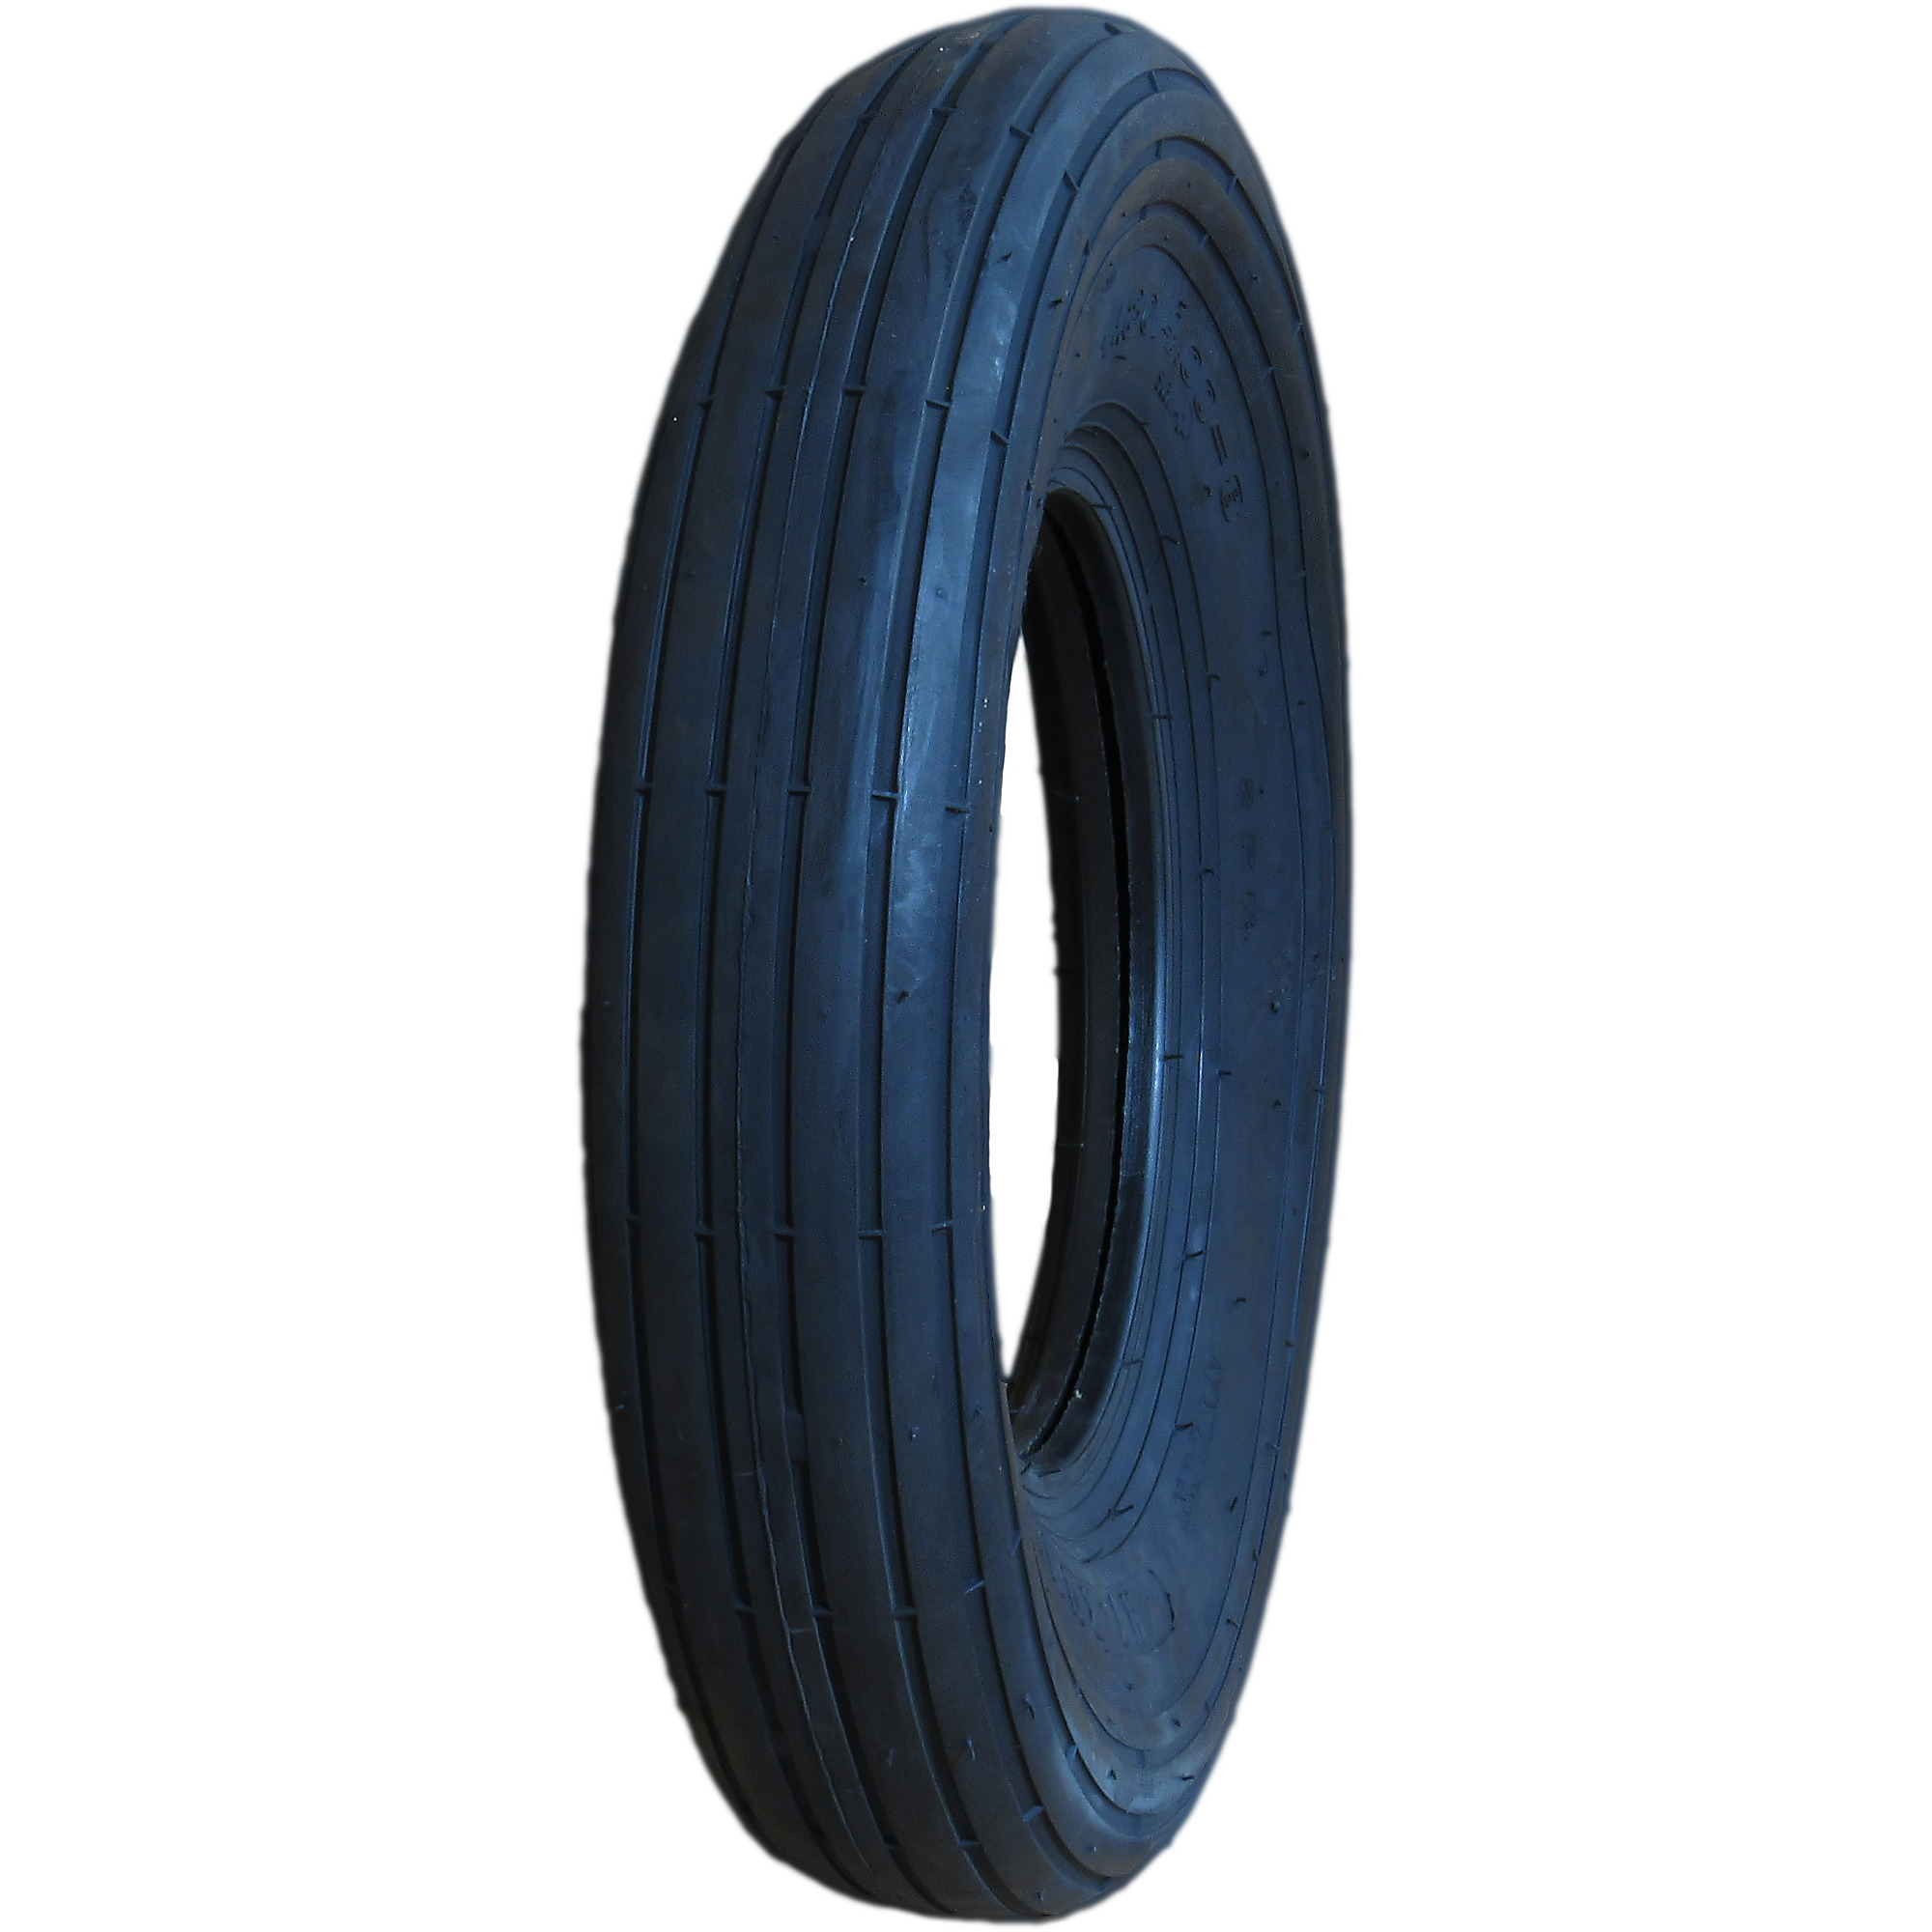 HI-RUN, Lawn Garden Tire, Rib, Tire Size 4.80/4.00-8 Load Range Rating A, Model WD1295